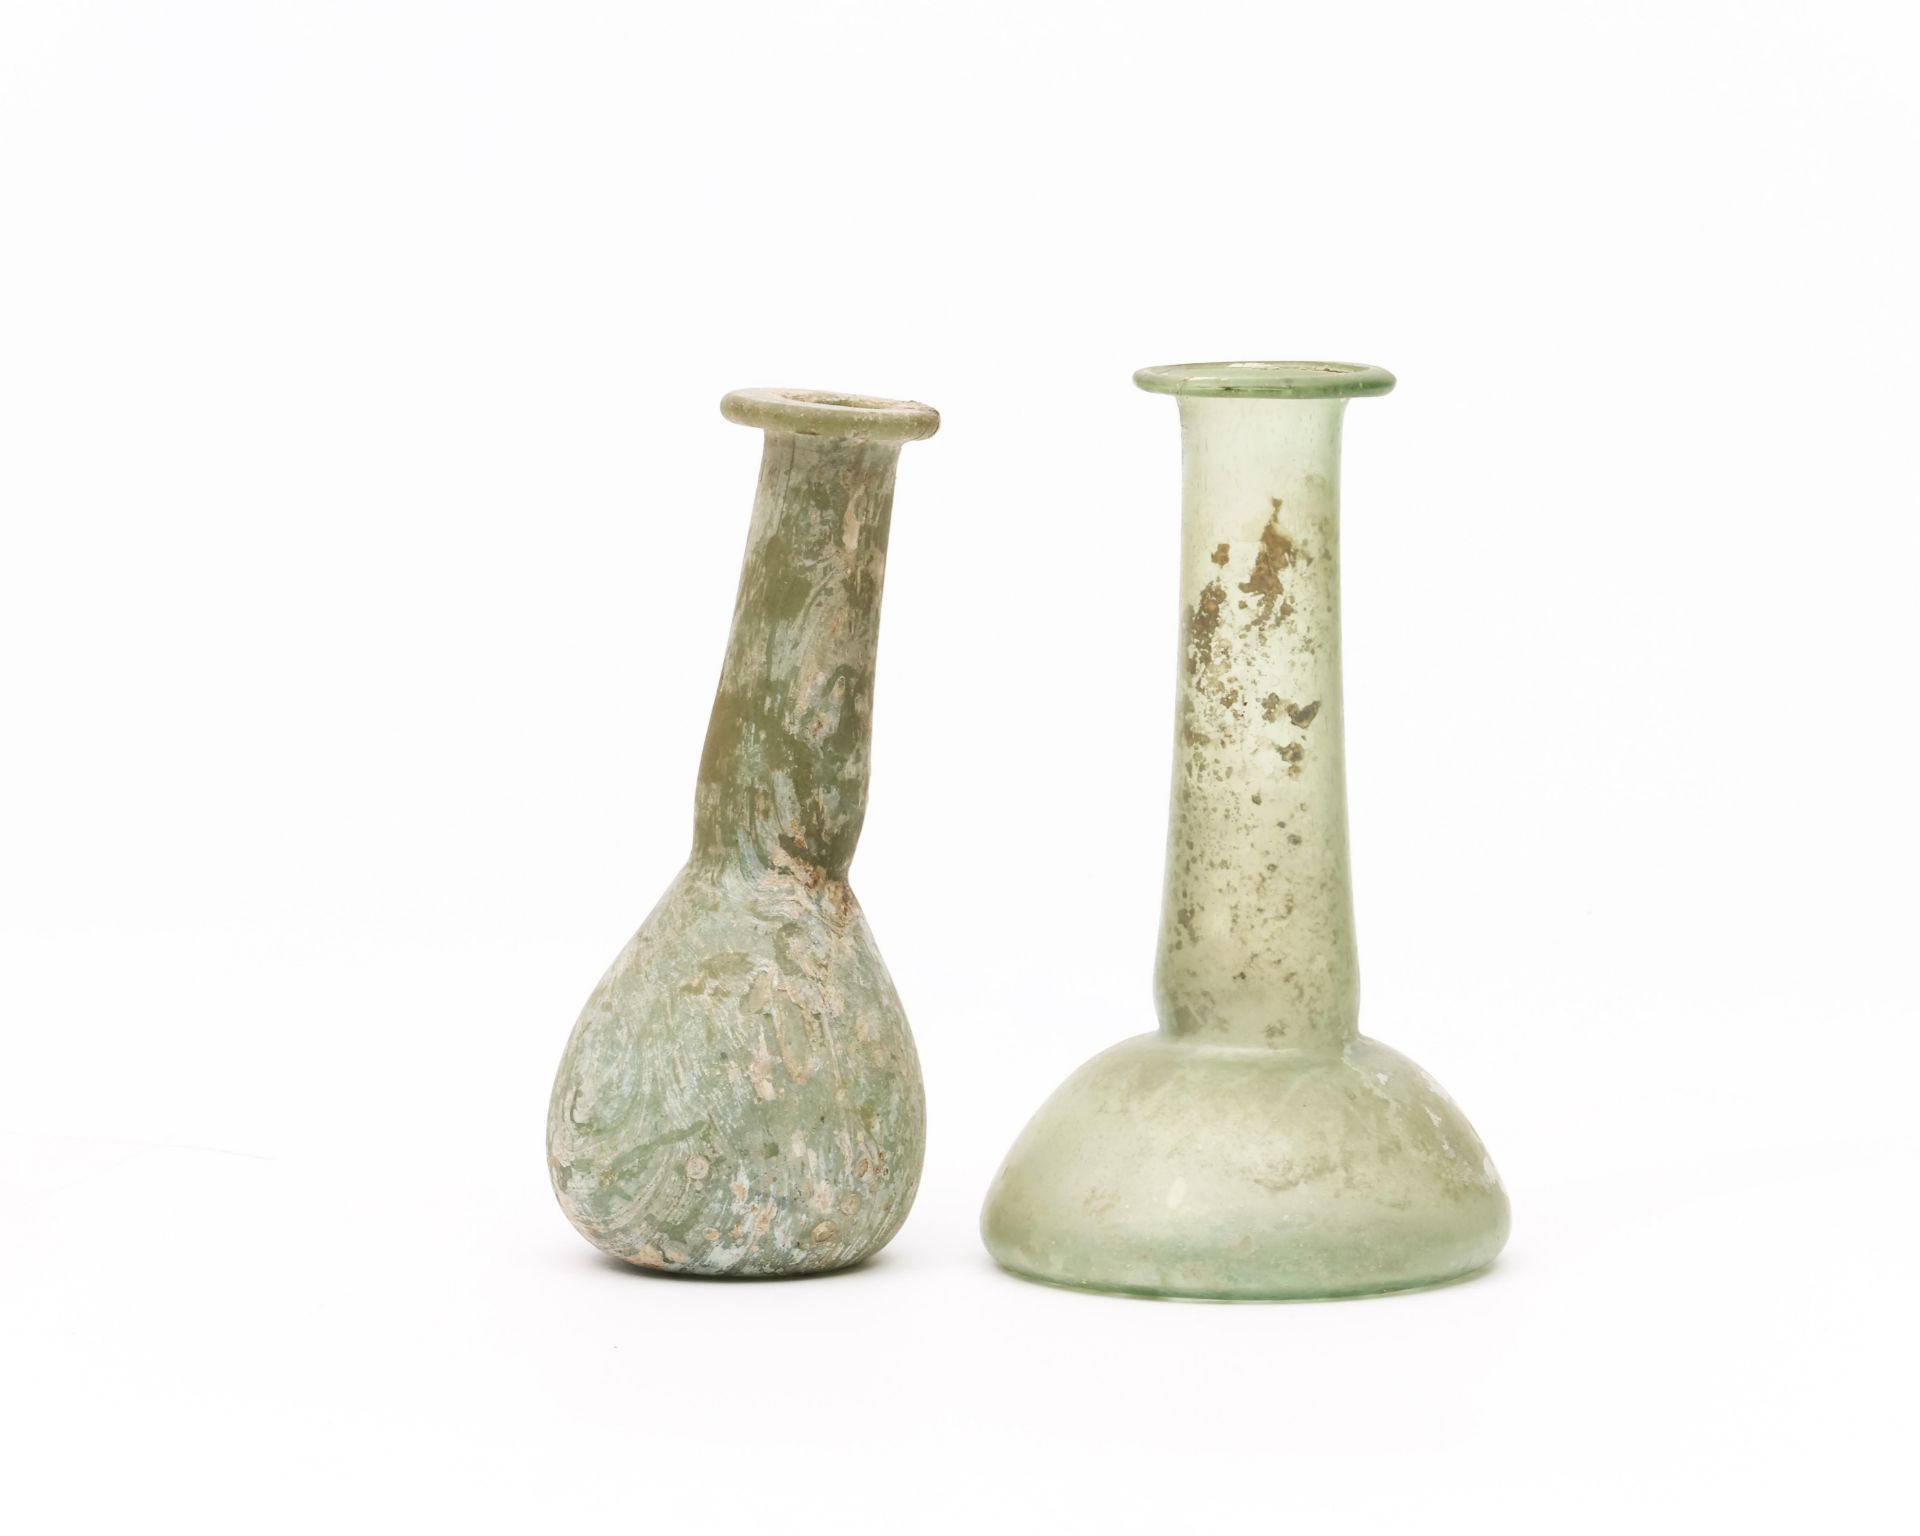 Two Roman glass flasks, 3rd century